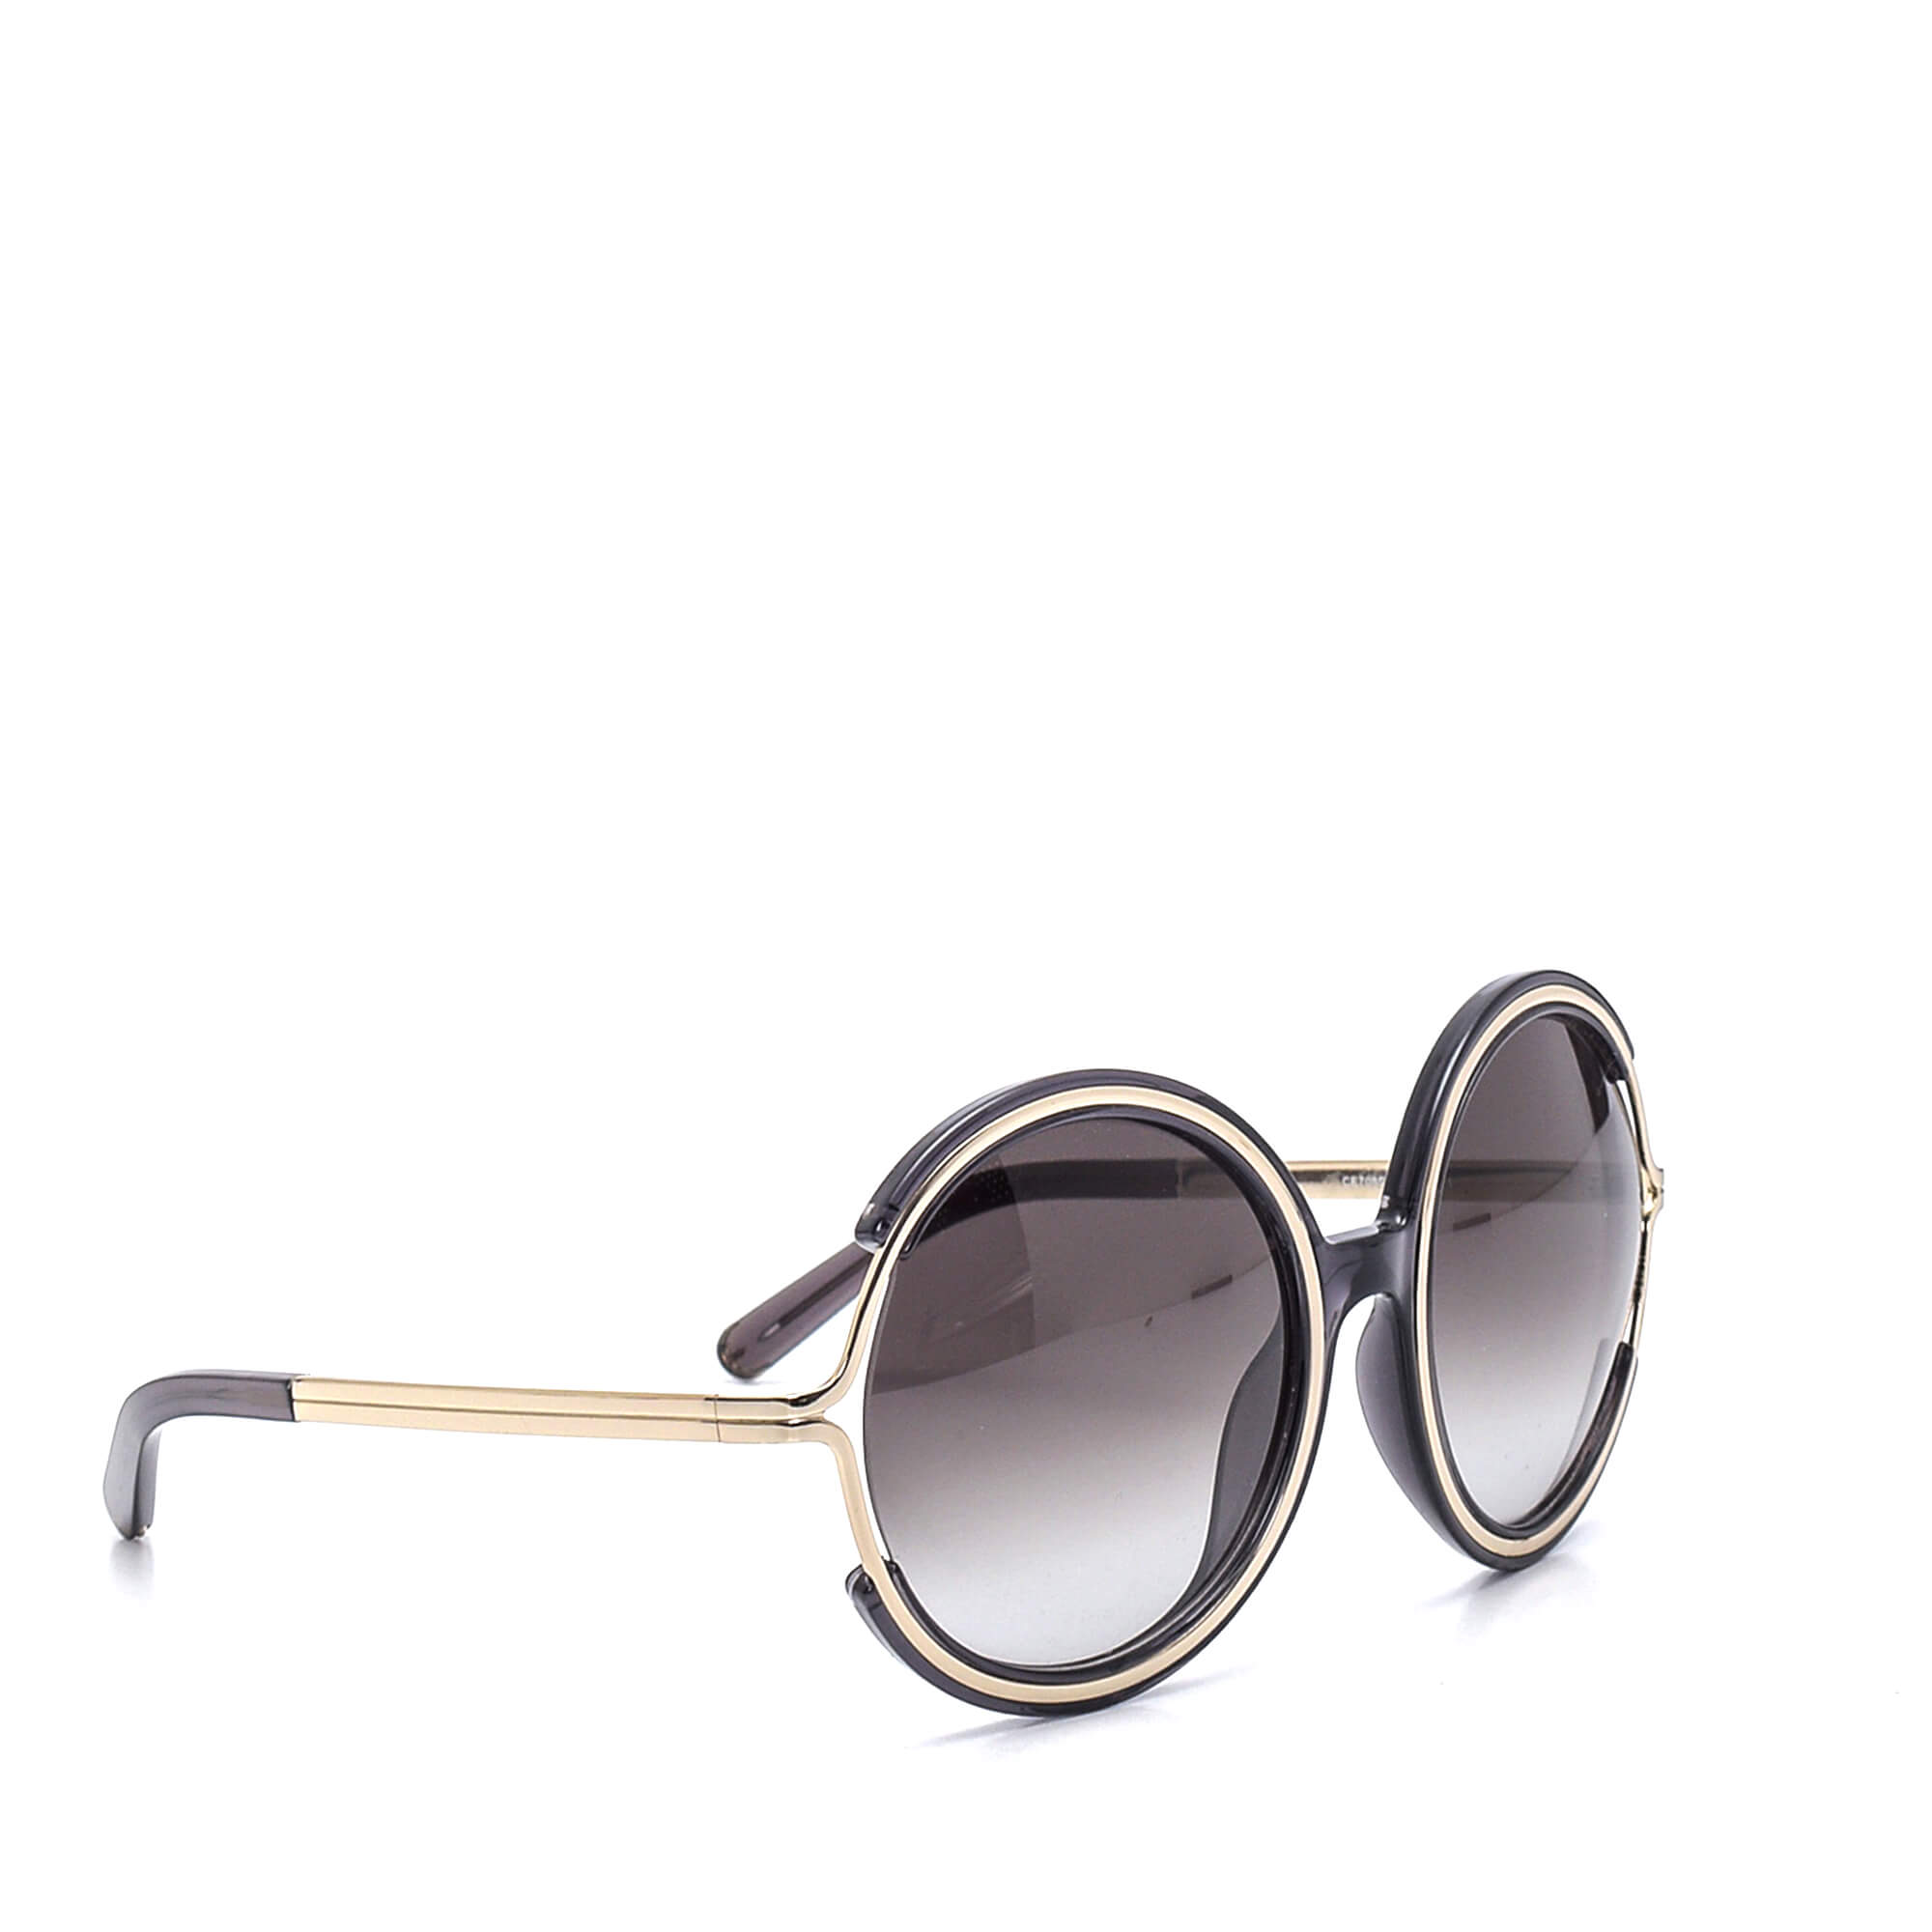 Chloe - Black & Silver Round Oversize Sunglasses